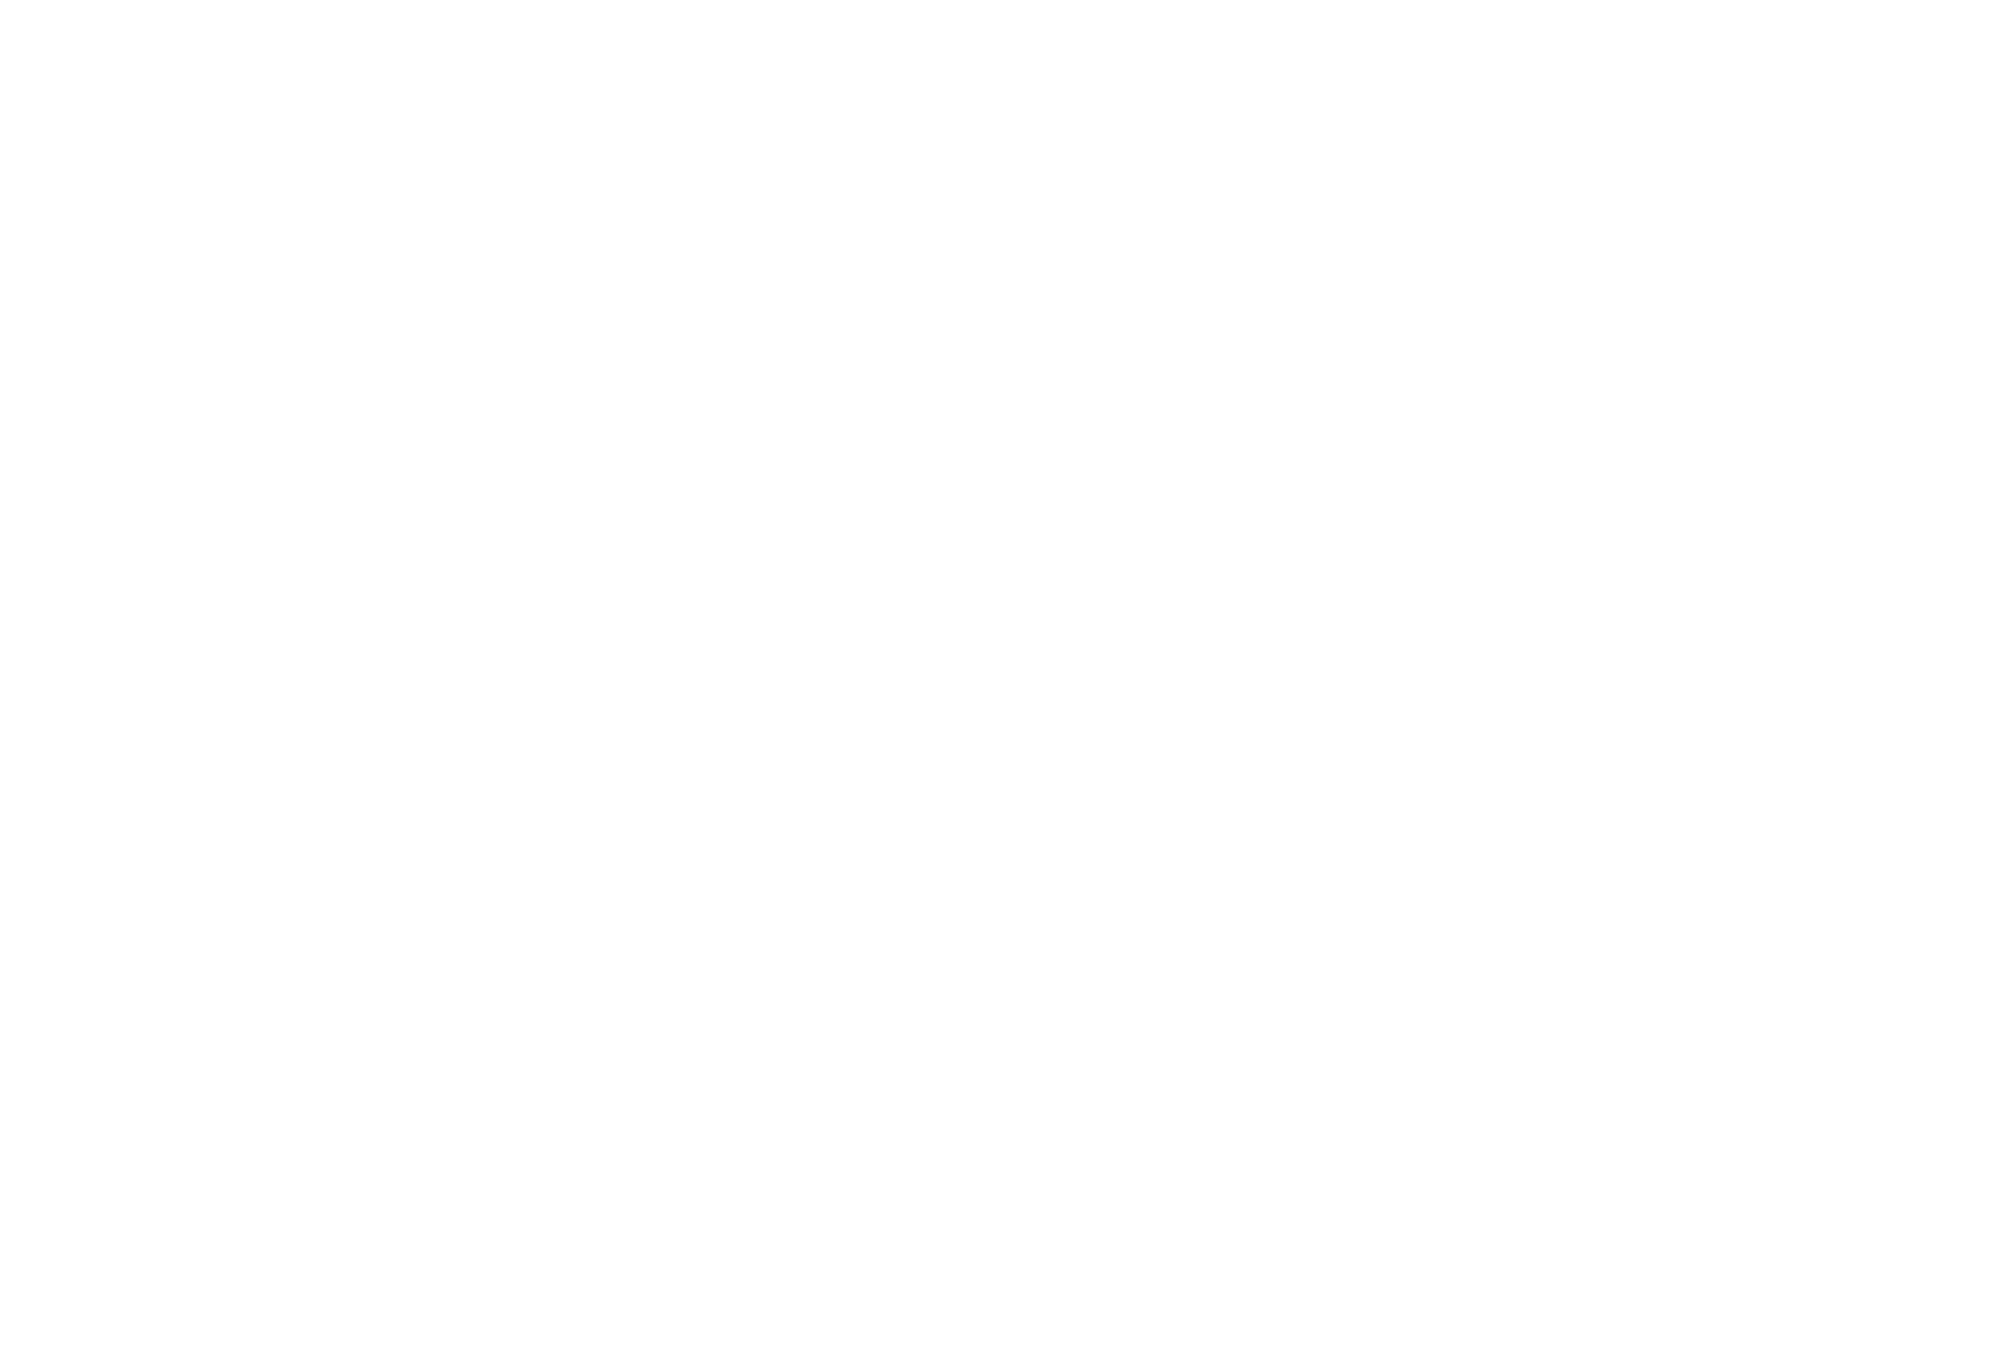 USDA approved